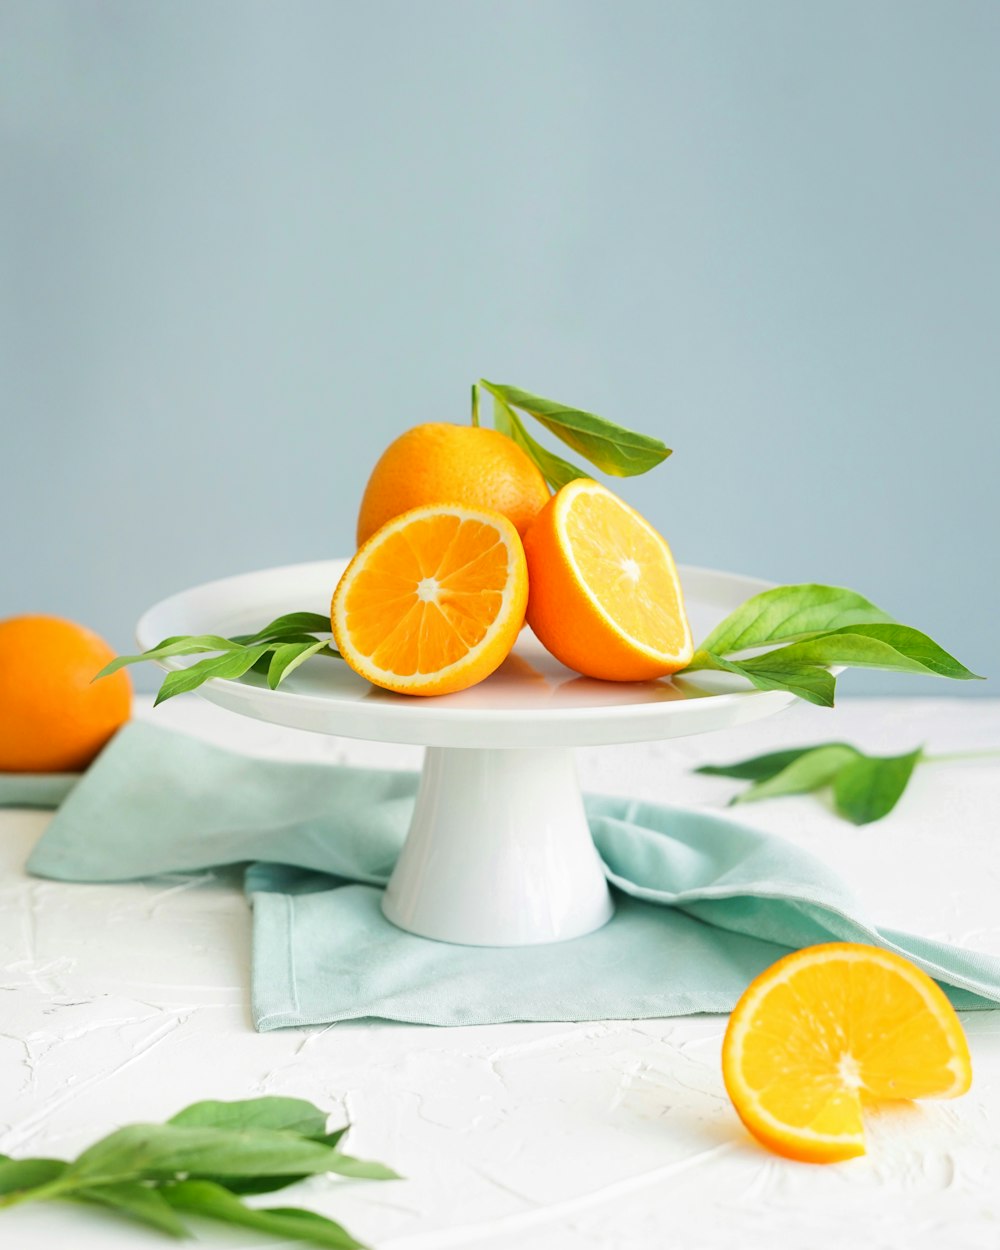 orange fruit in white ceramic plate close-up photography